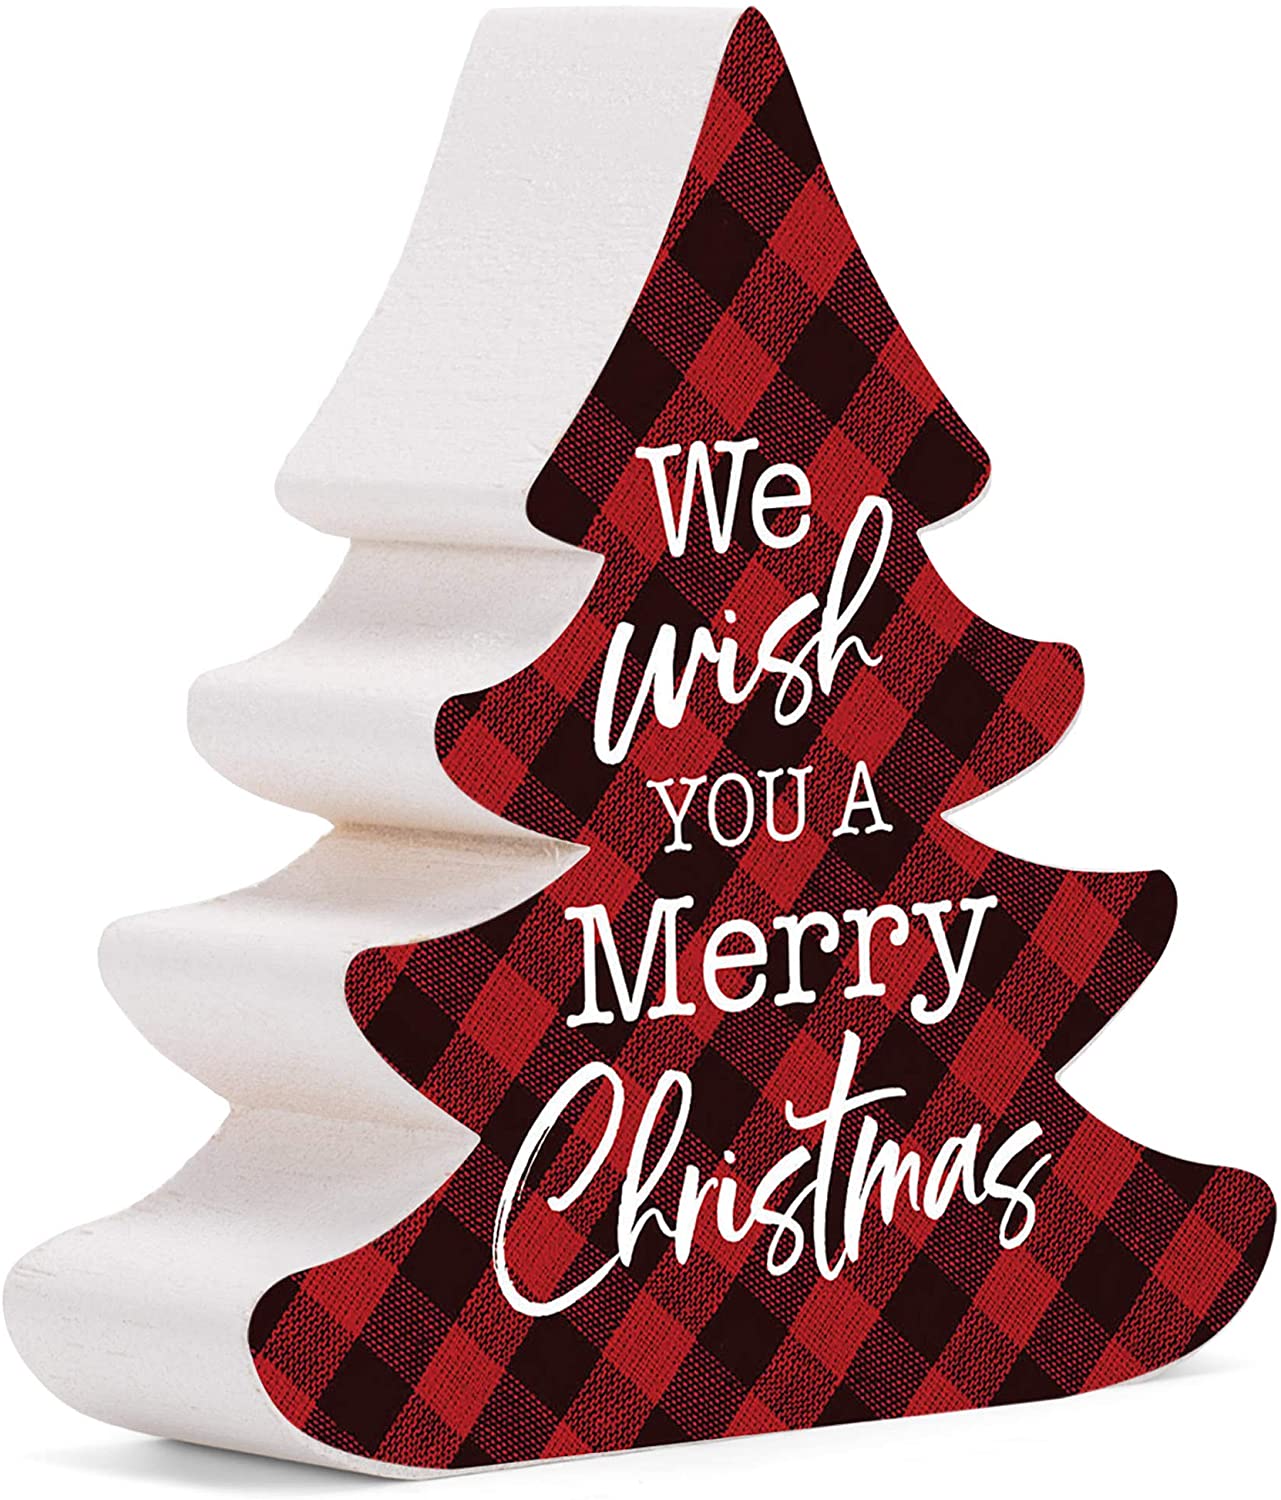 We Wish You A Merry Christmas Red Plaid Wood Christmas Shape Sign